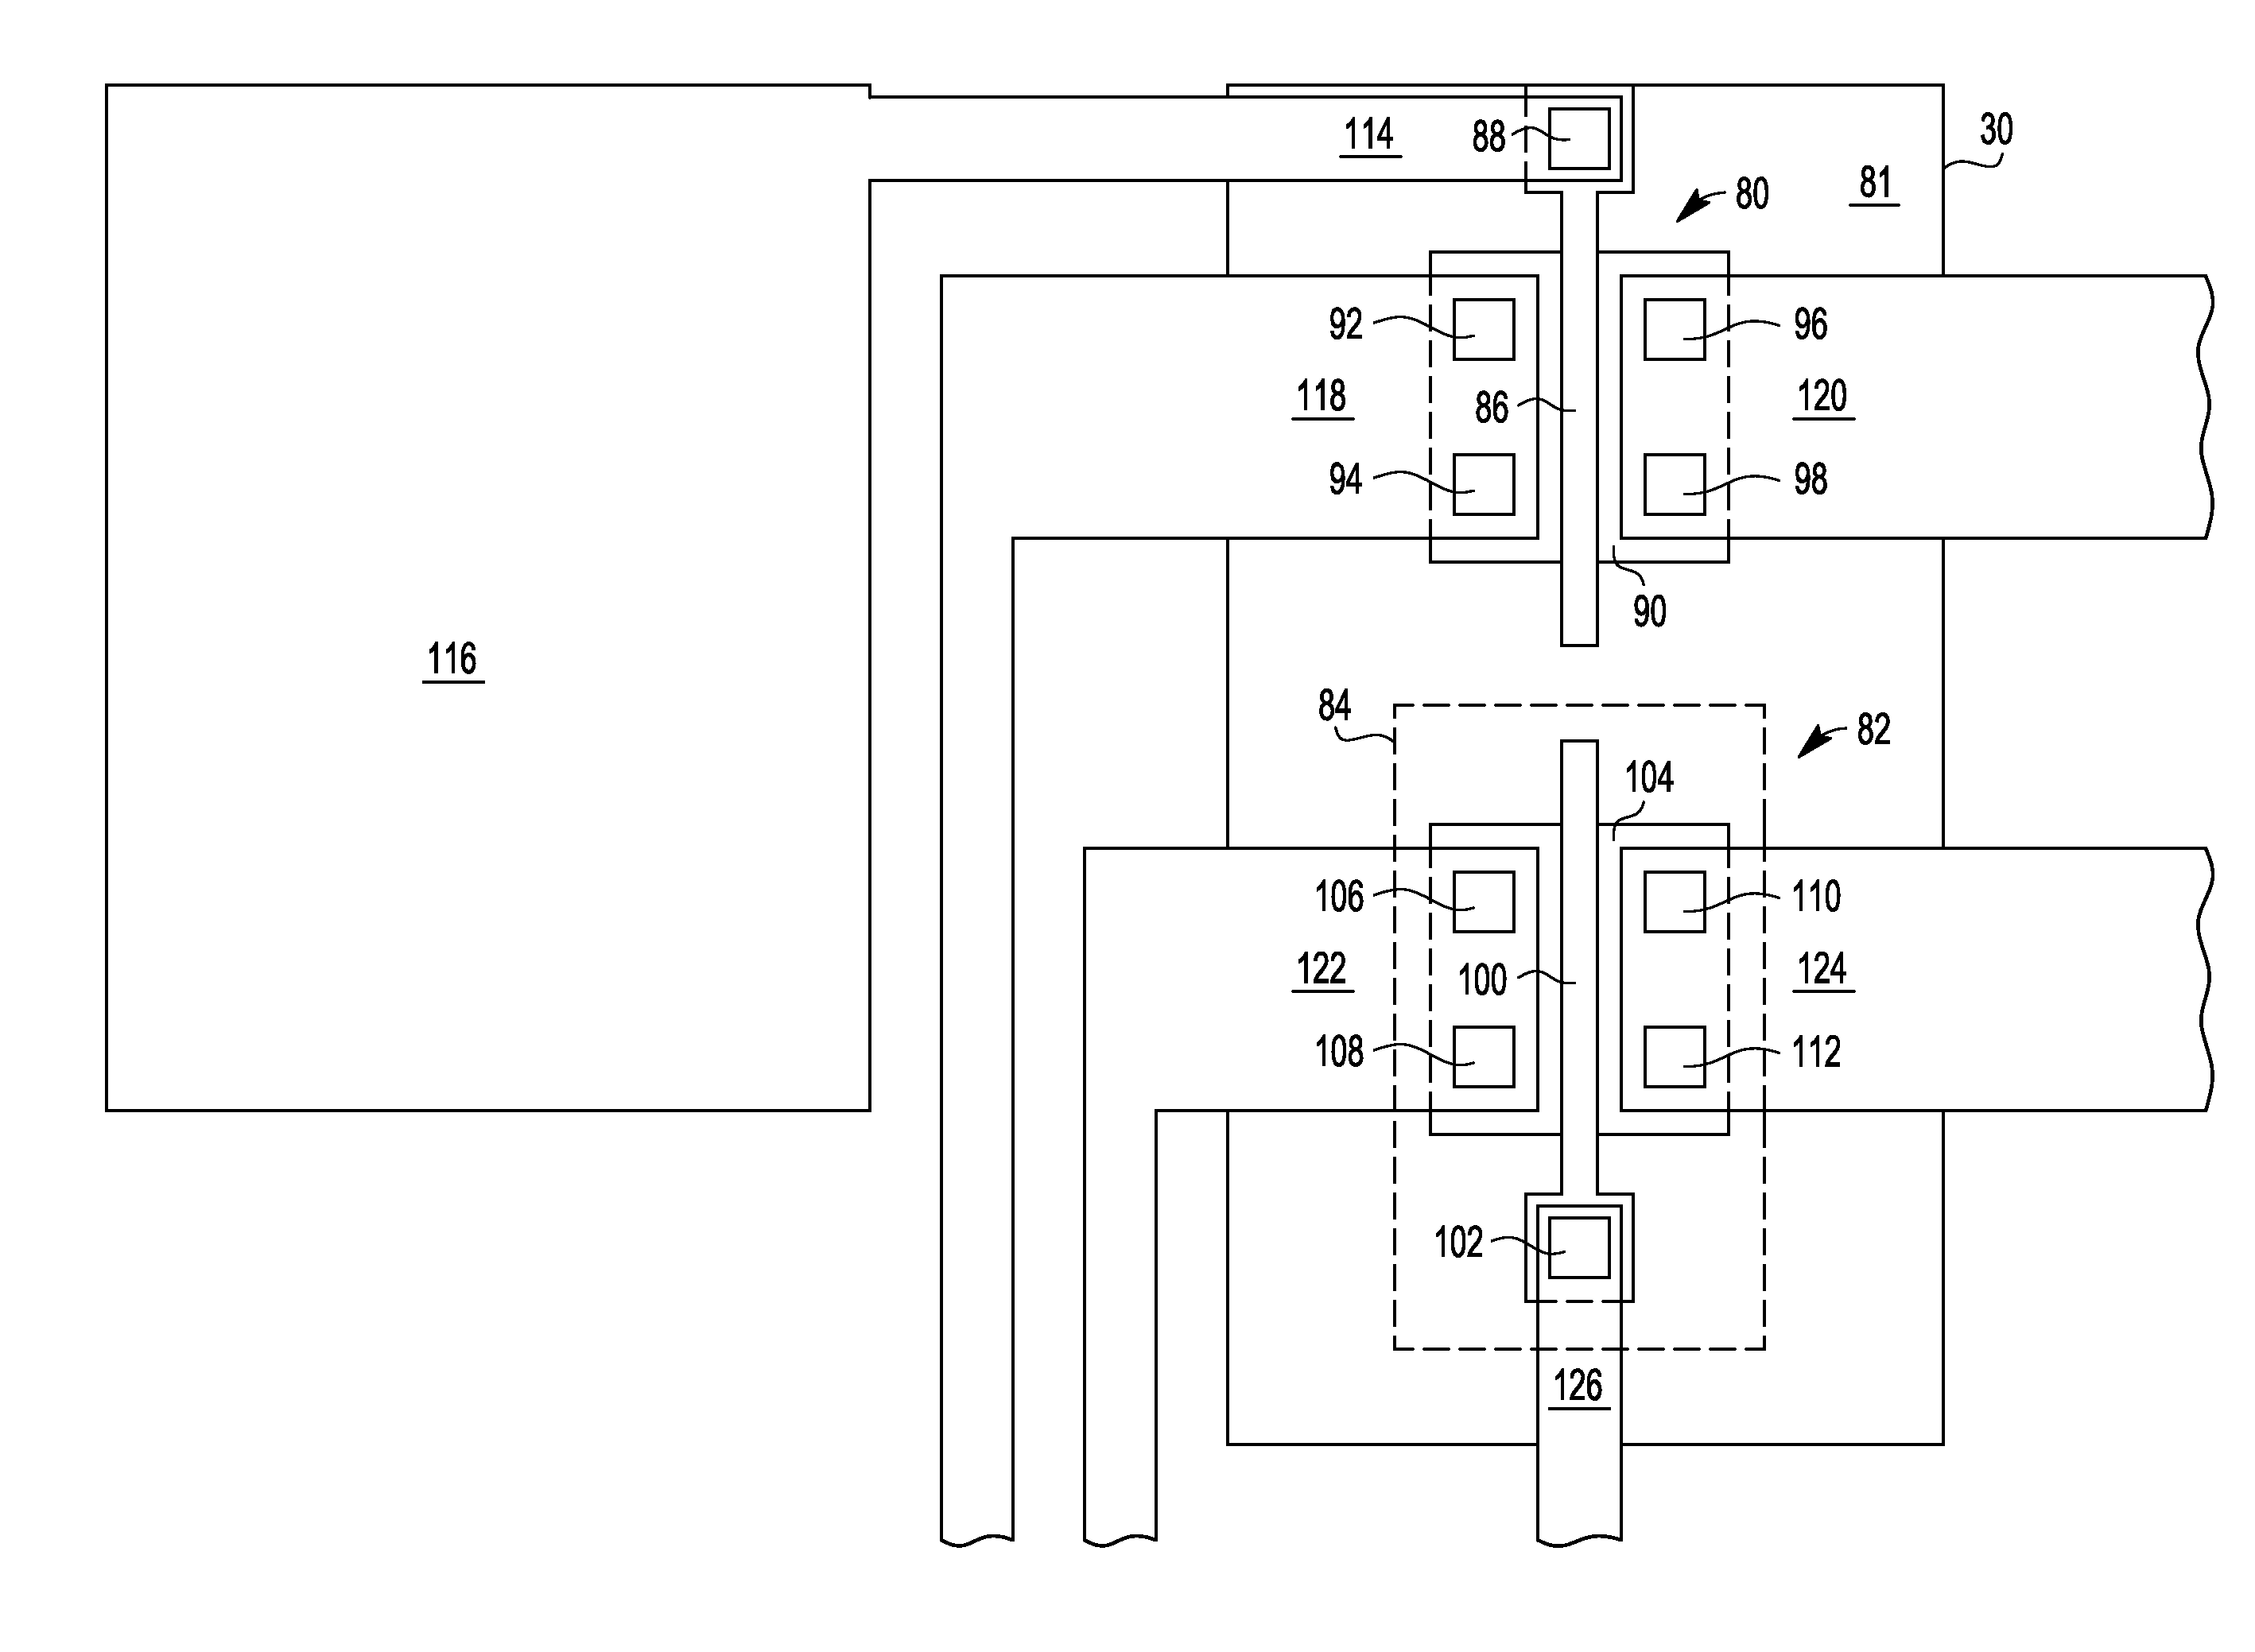 Integrated circuit having a filler standard cell